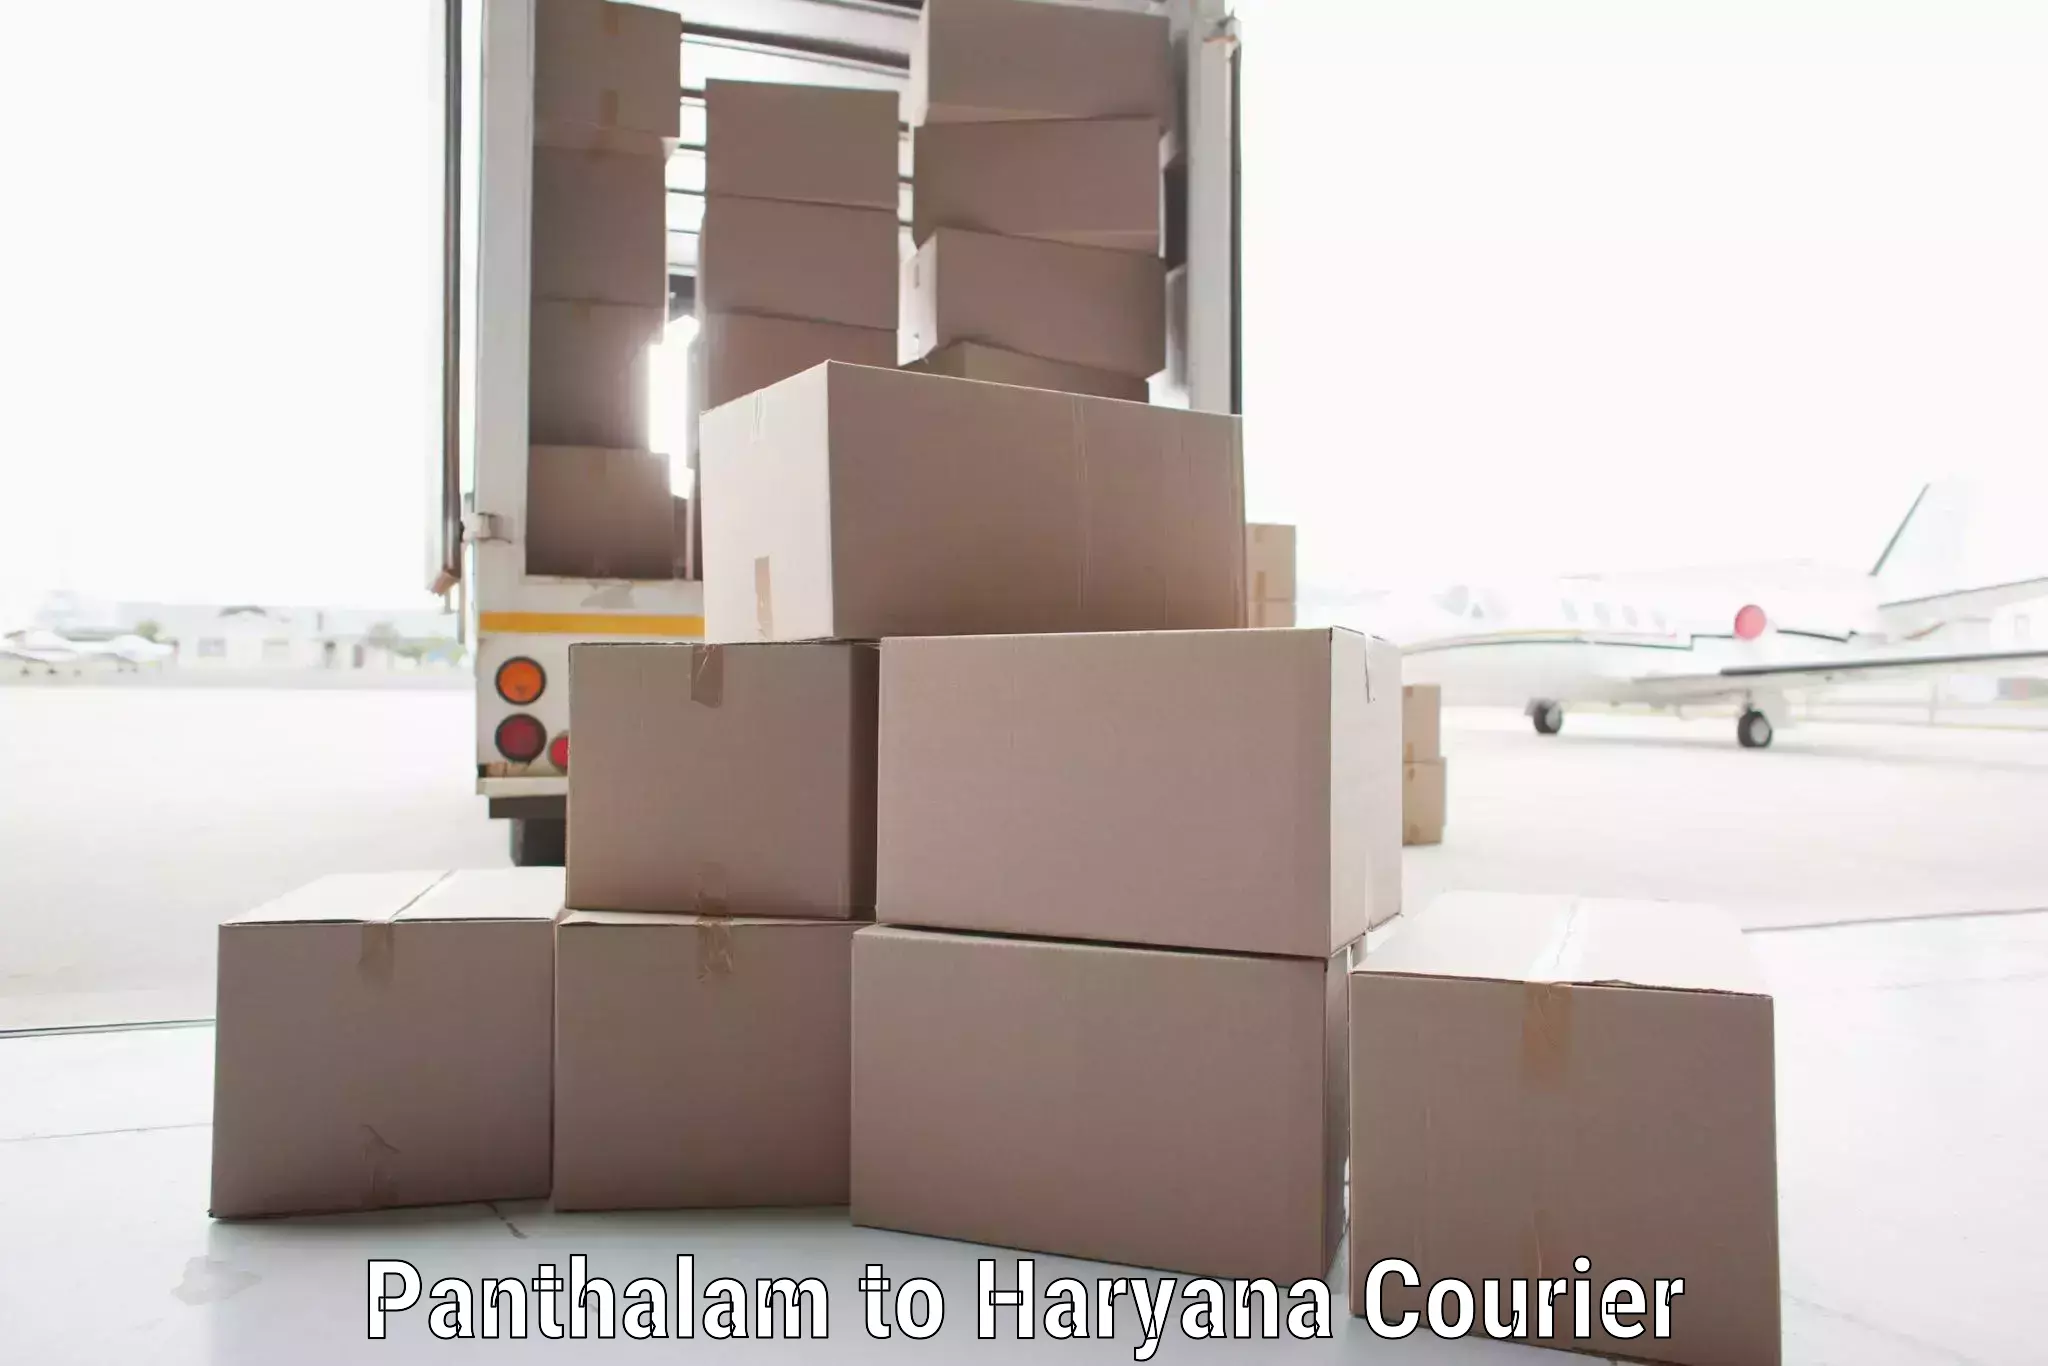 Courier service efficiency in Panthalam to Yamuna Nagar